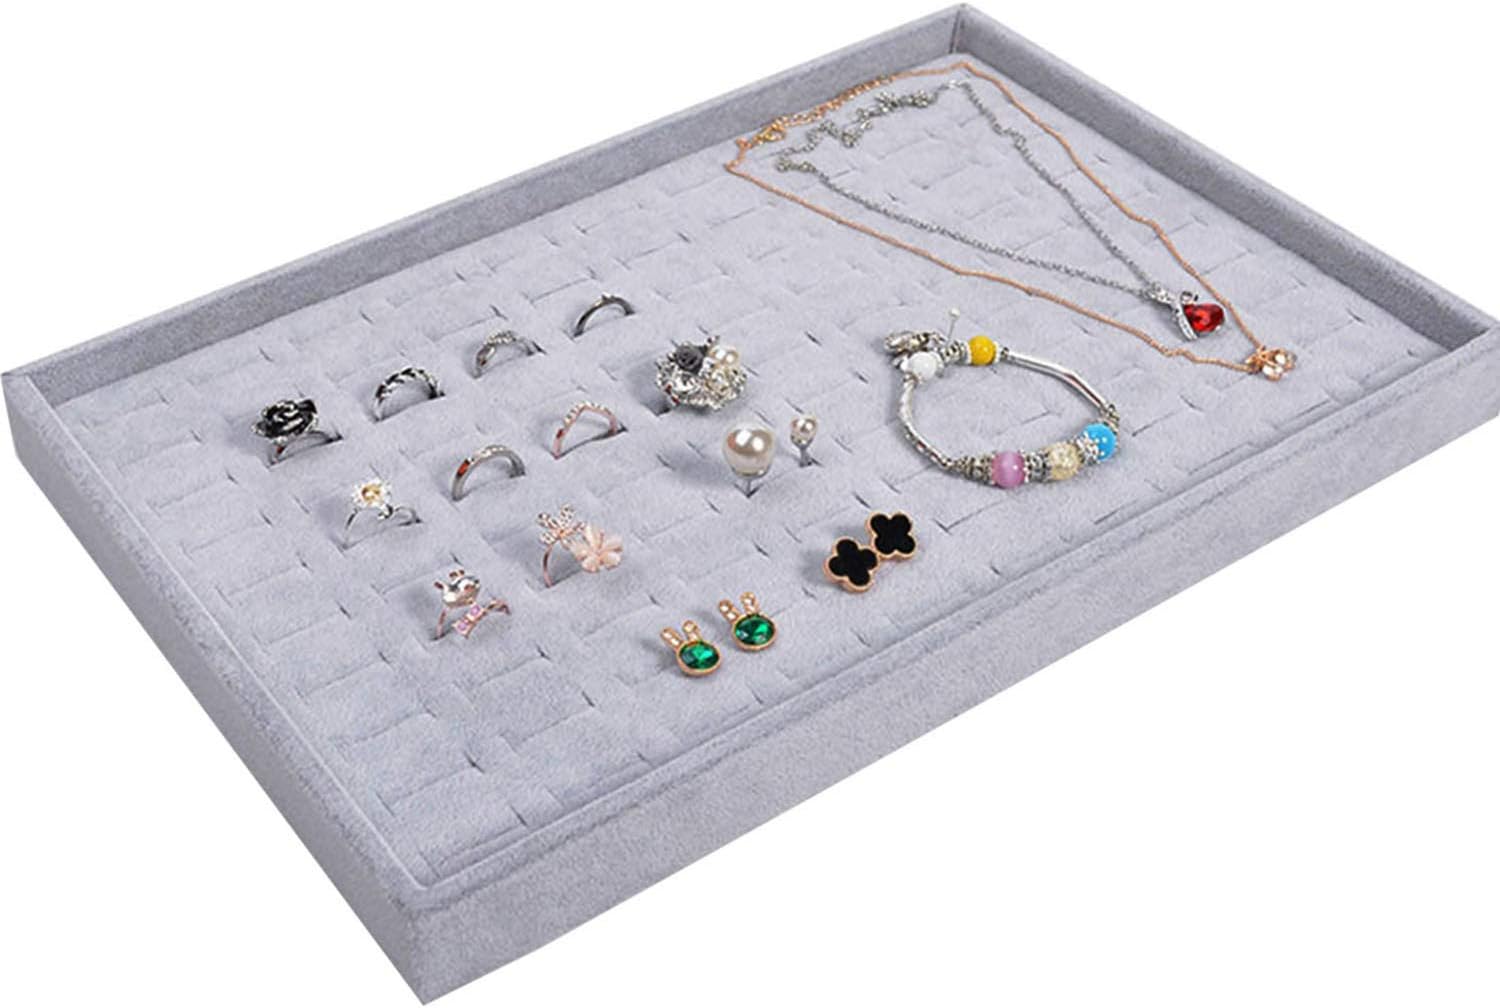 100 Slots Jewelry Accessories Organizer Box